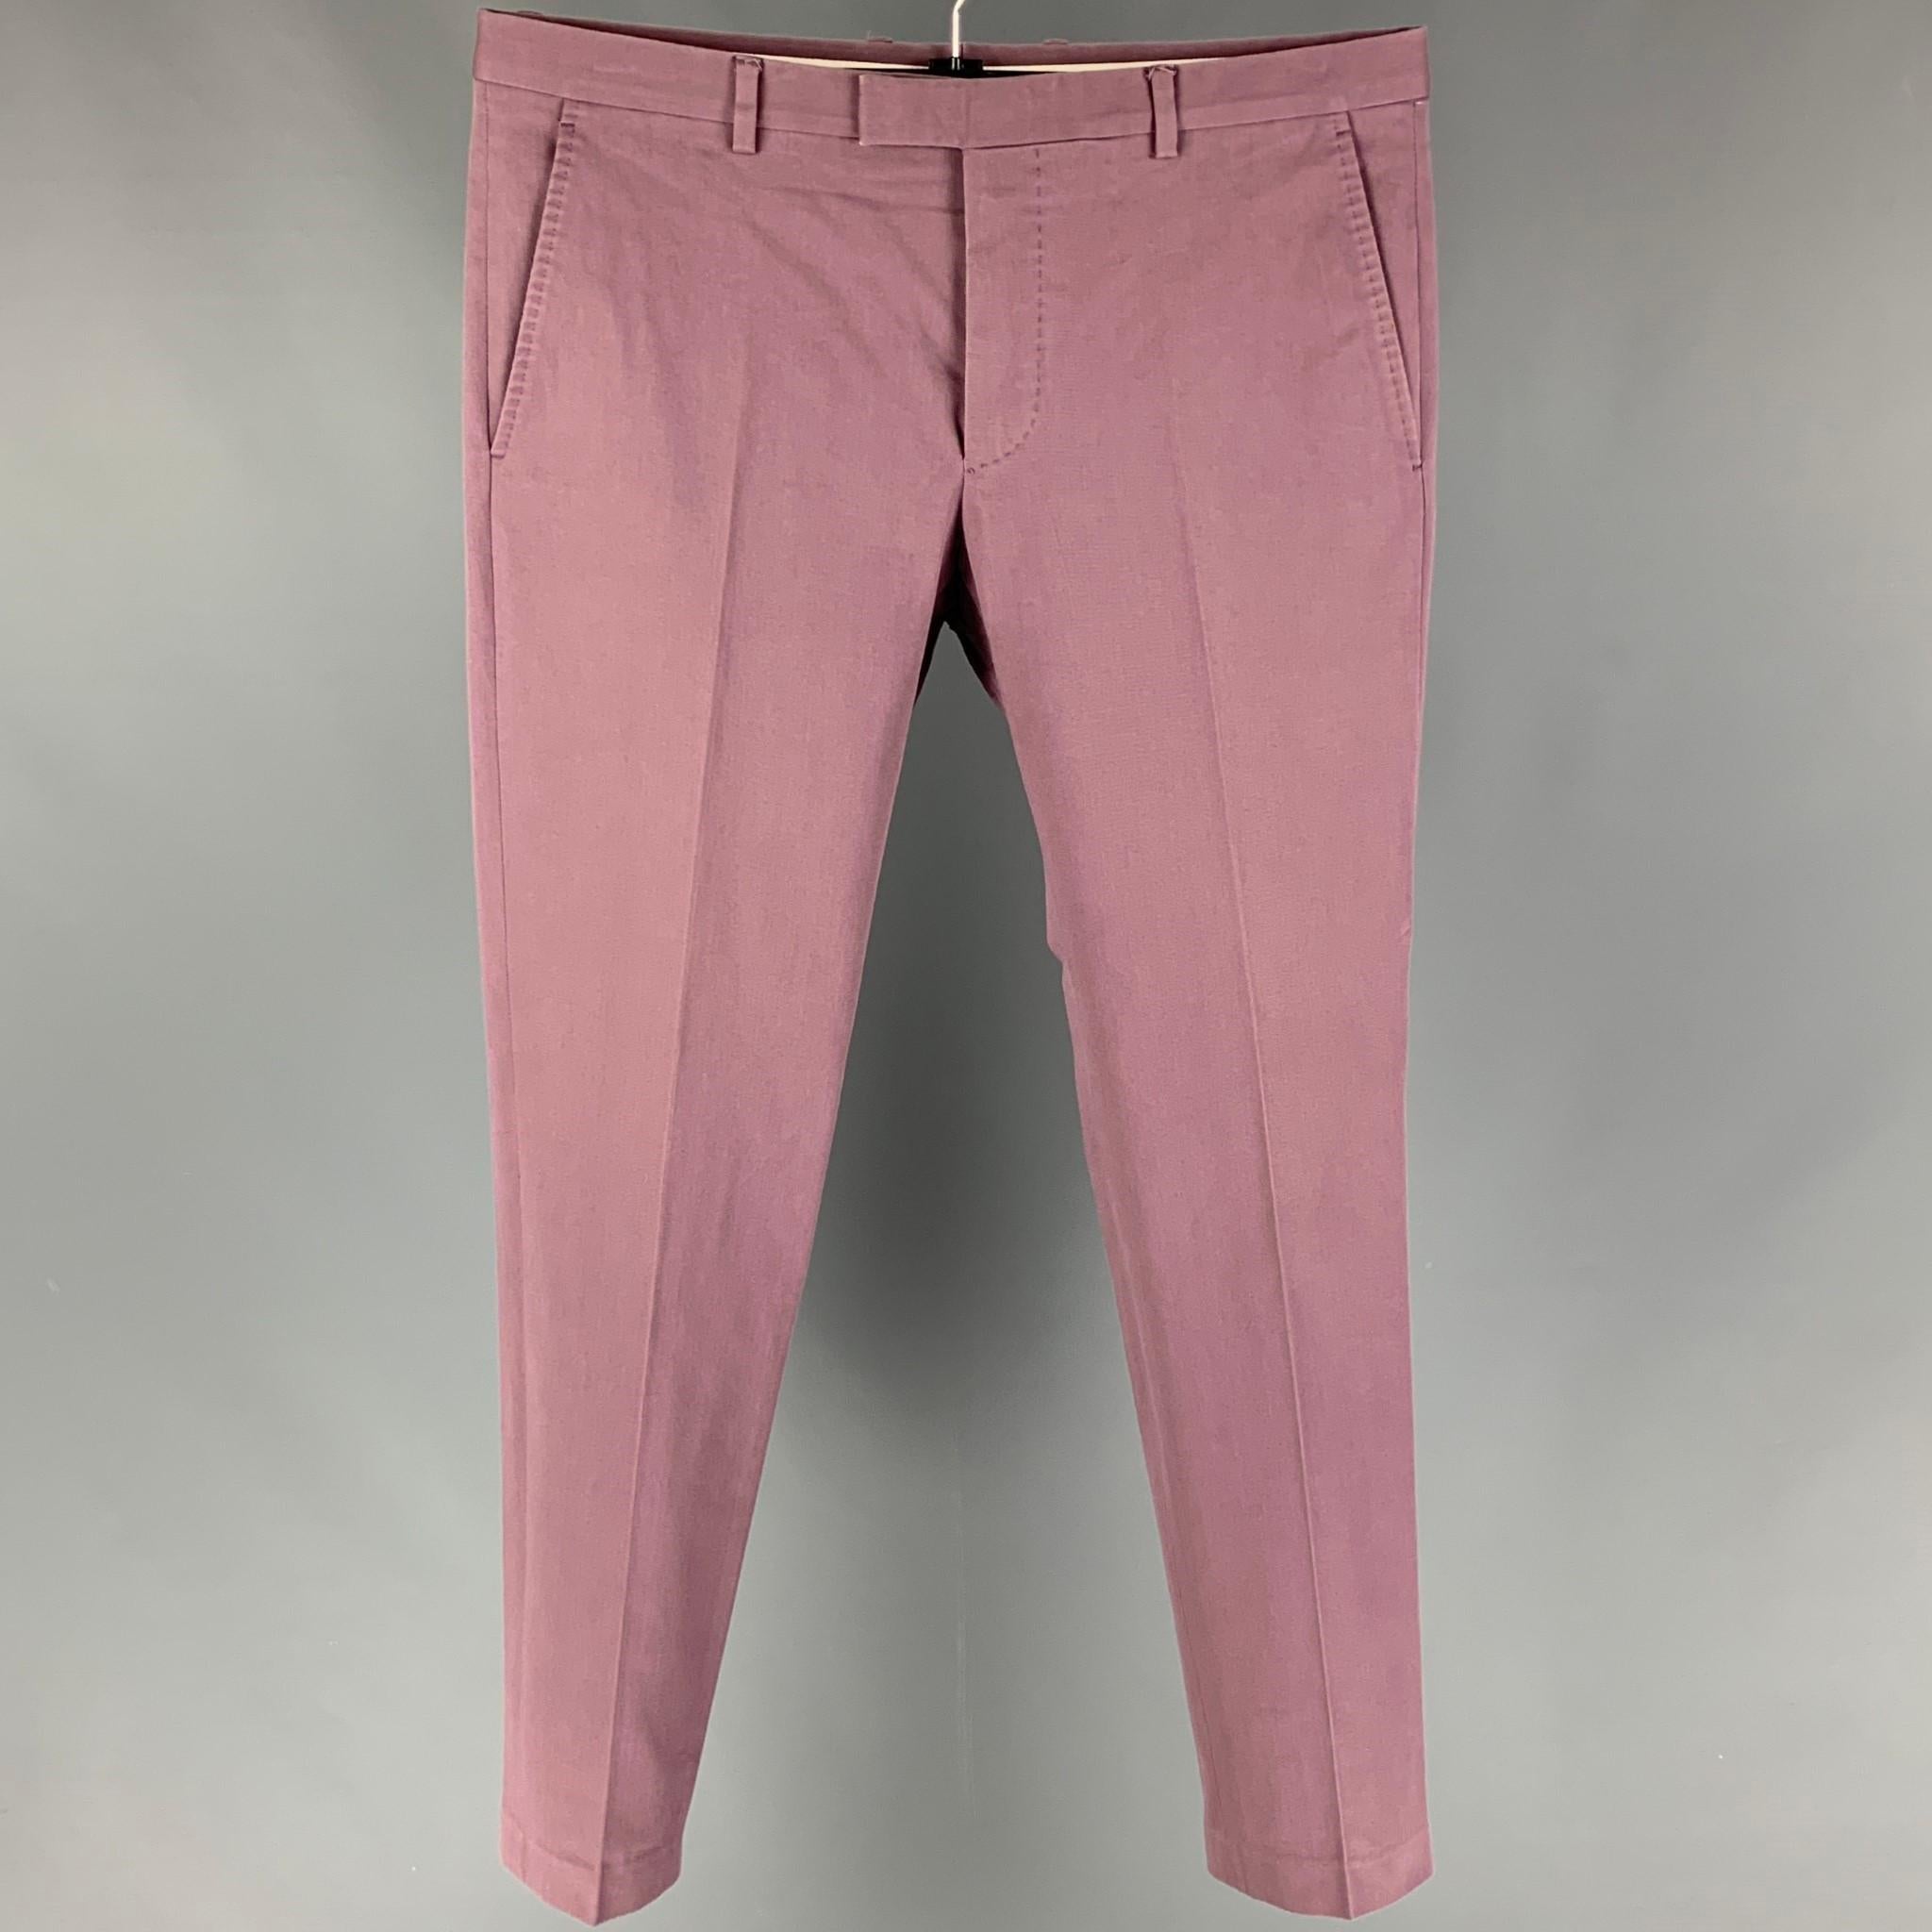 GUCCI Size 34 Purple Flat Front Casual Pants